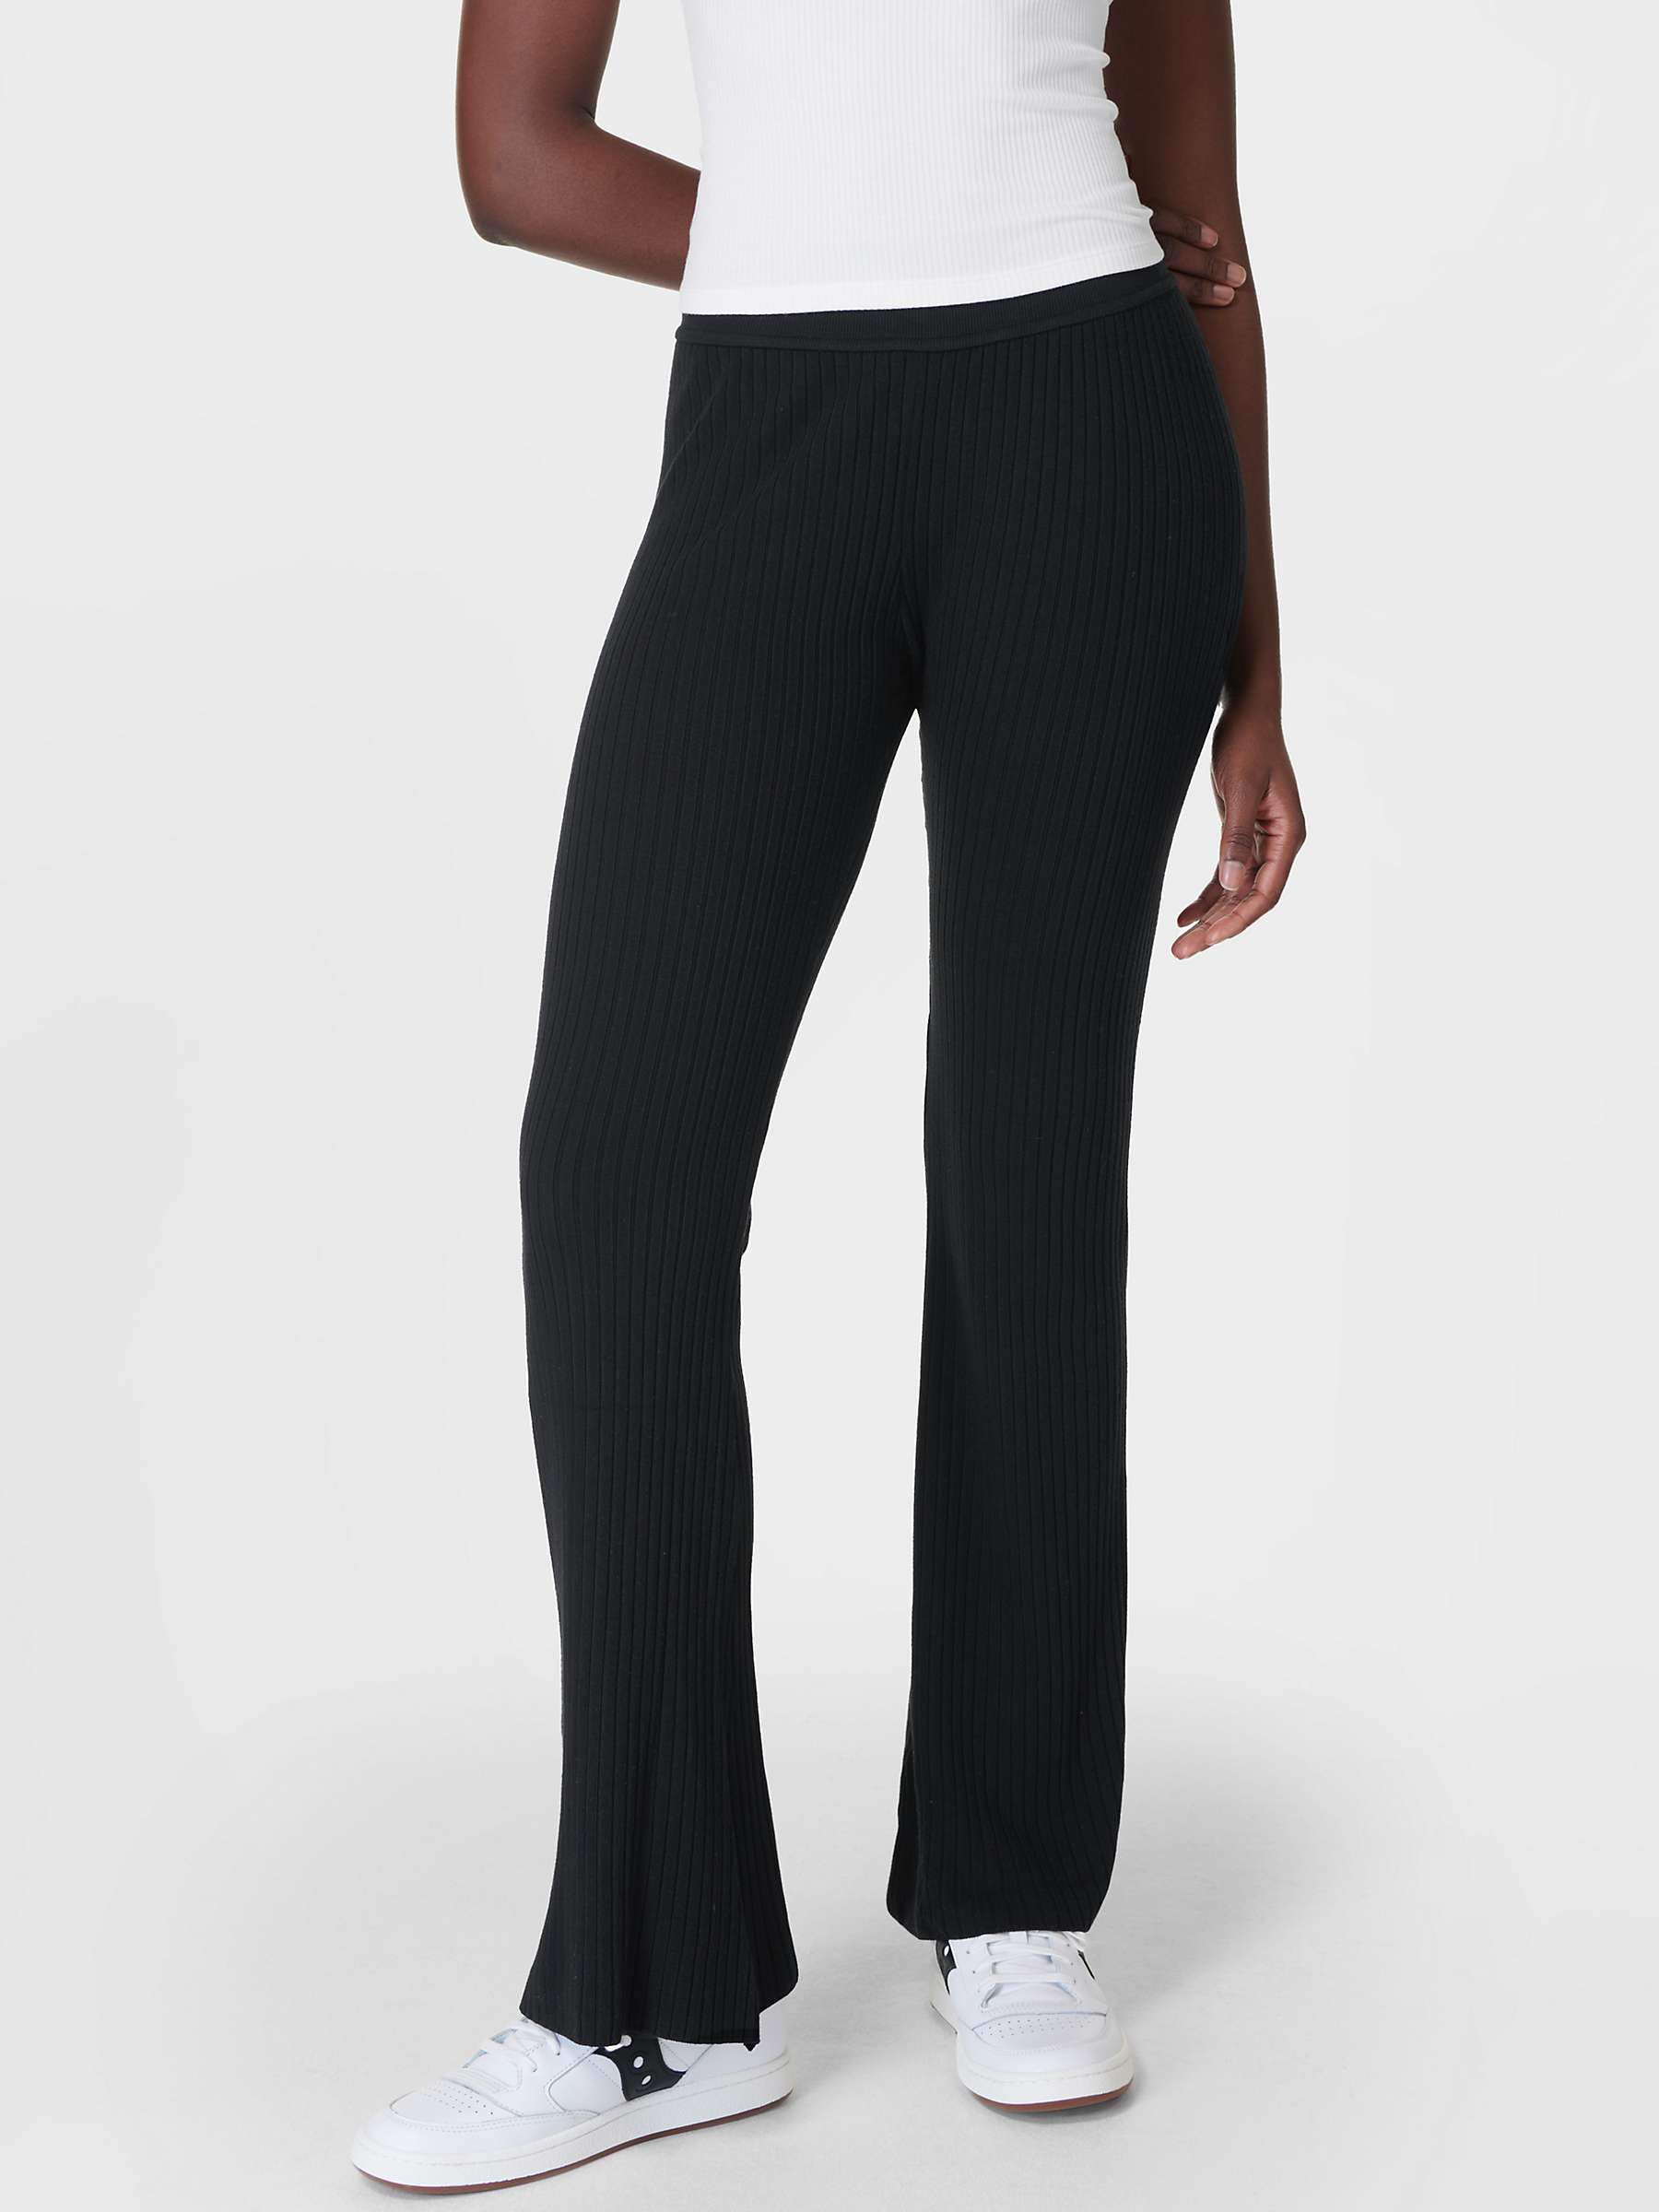 Buy Sweaty Betty Selene Knitted Trousers, Black Online at johnlewis.com